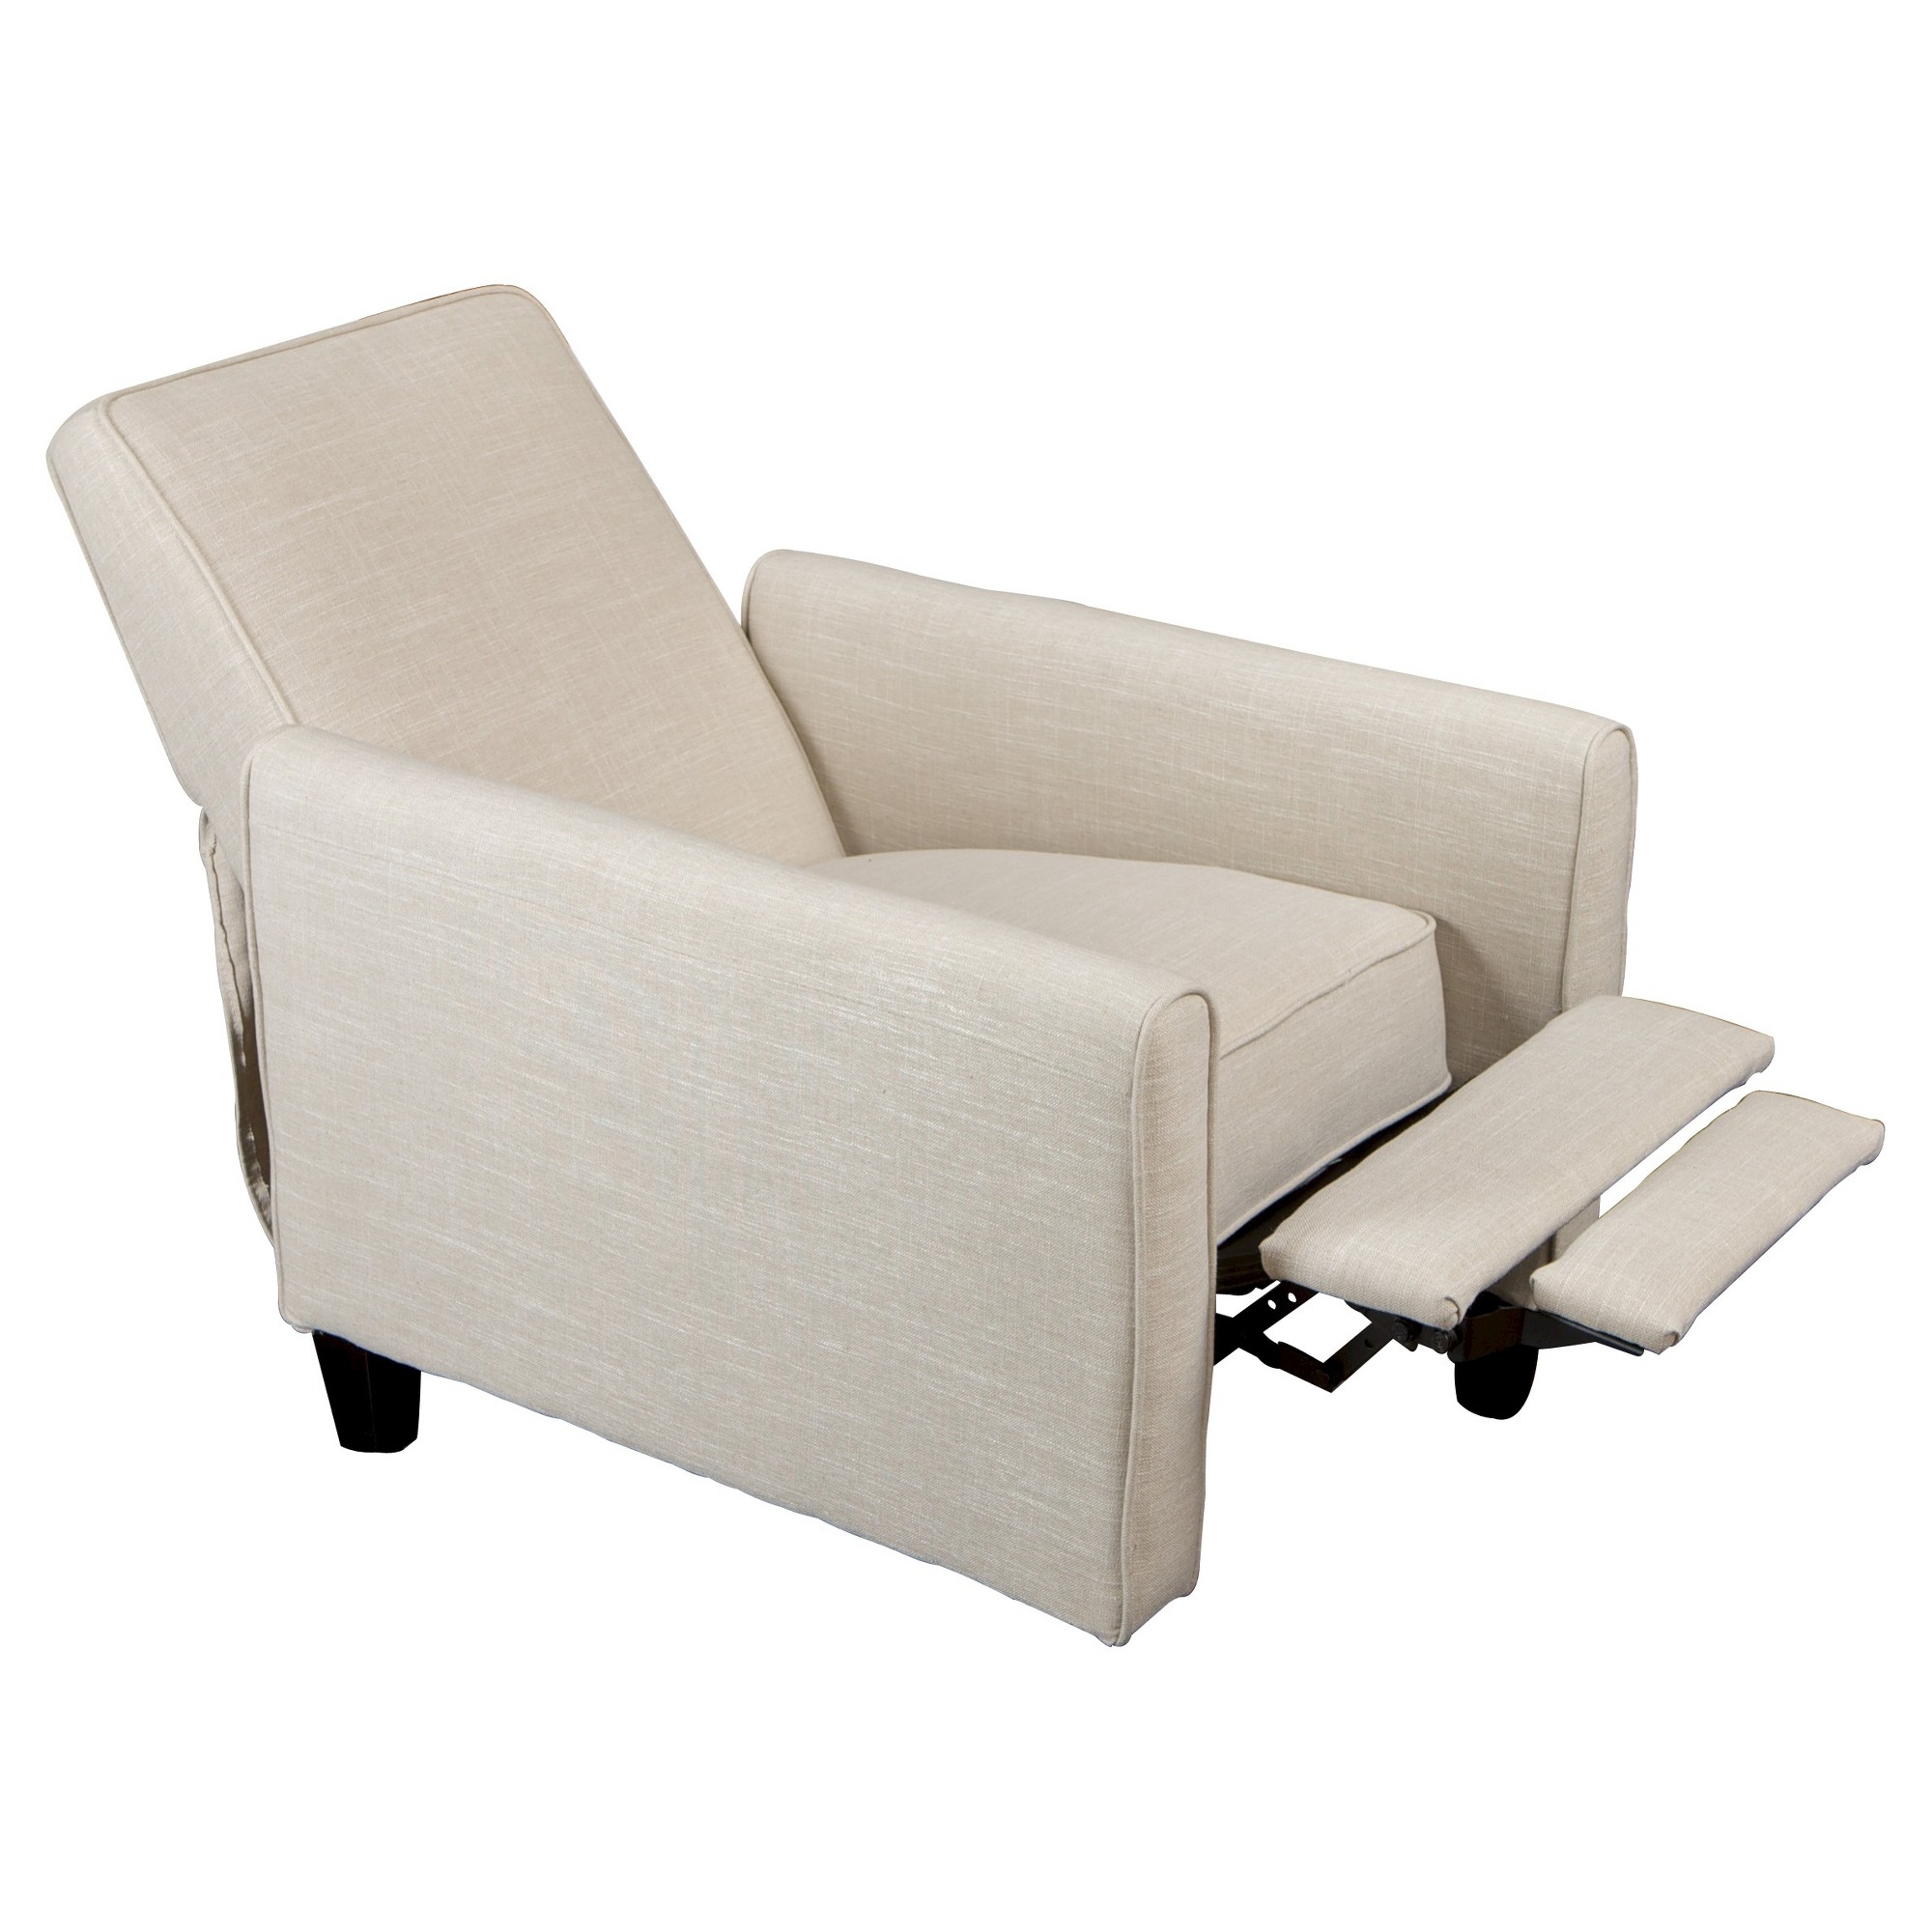 Jamestown design recliner club chair modern chairs great deal furniture